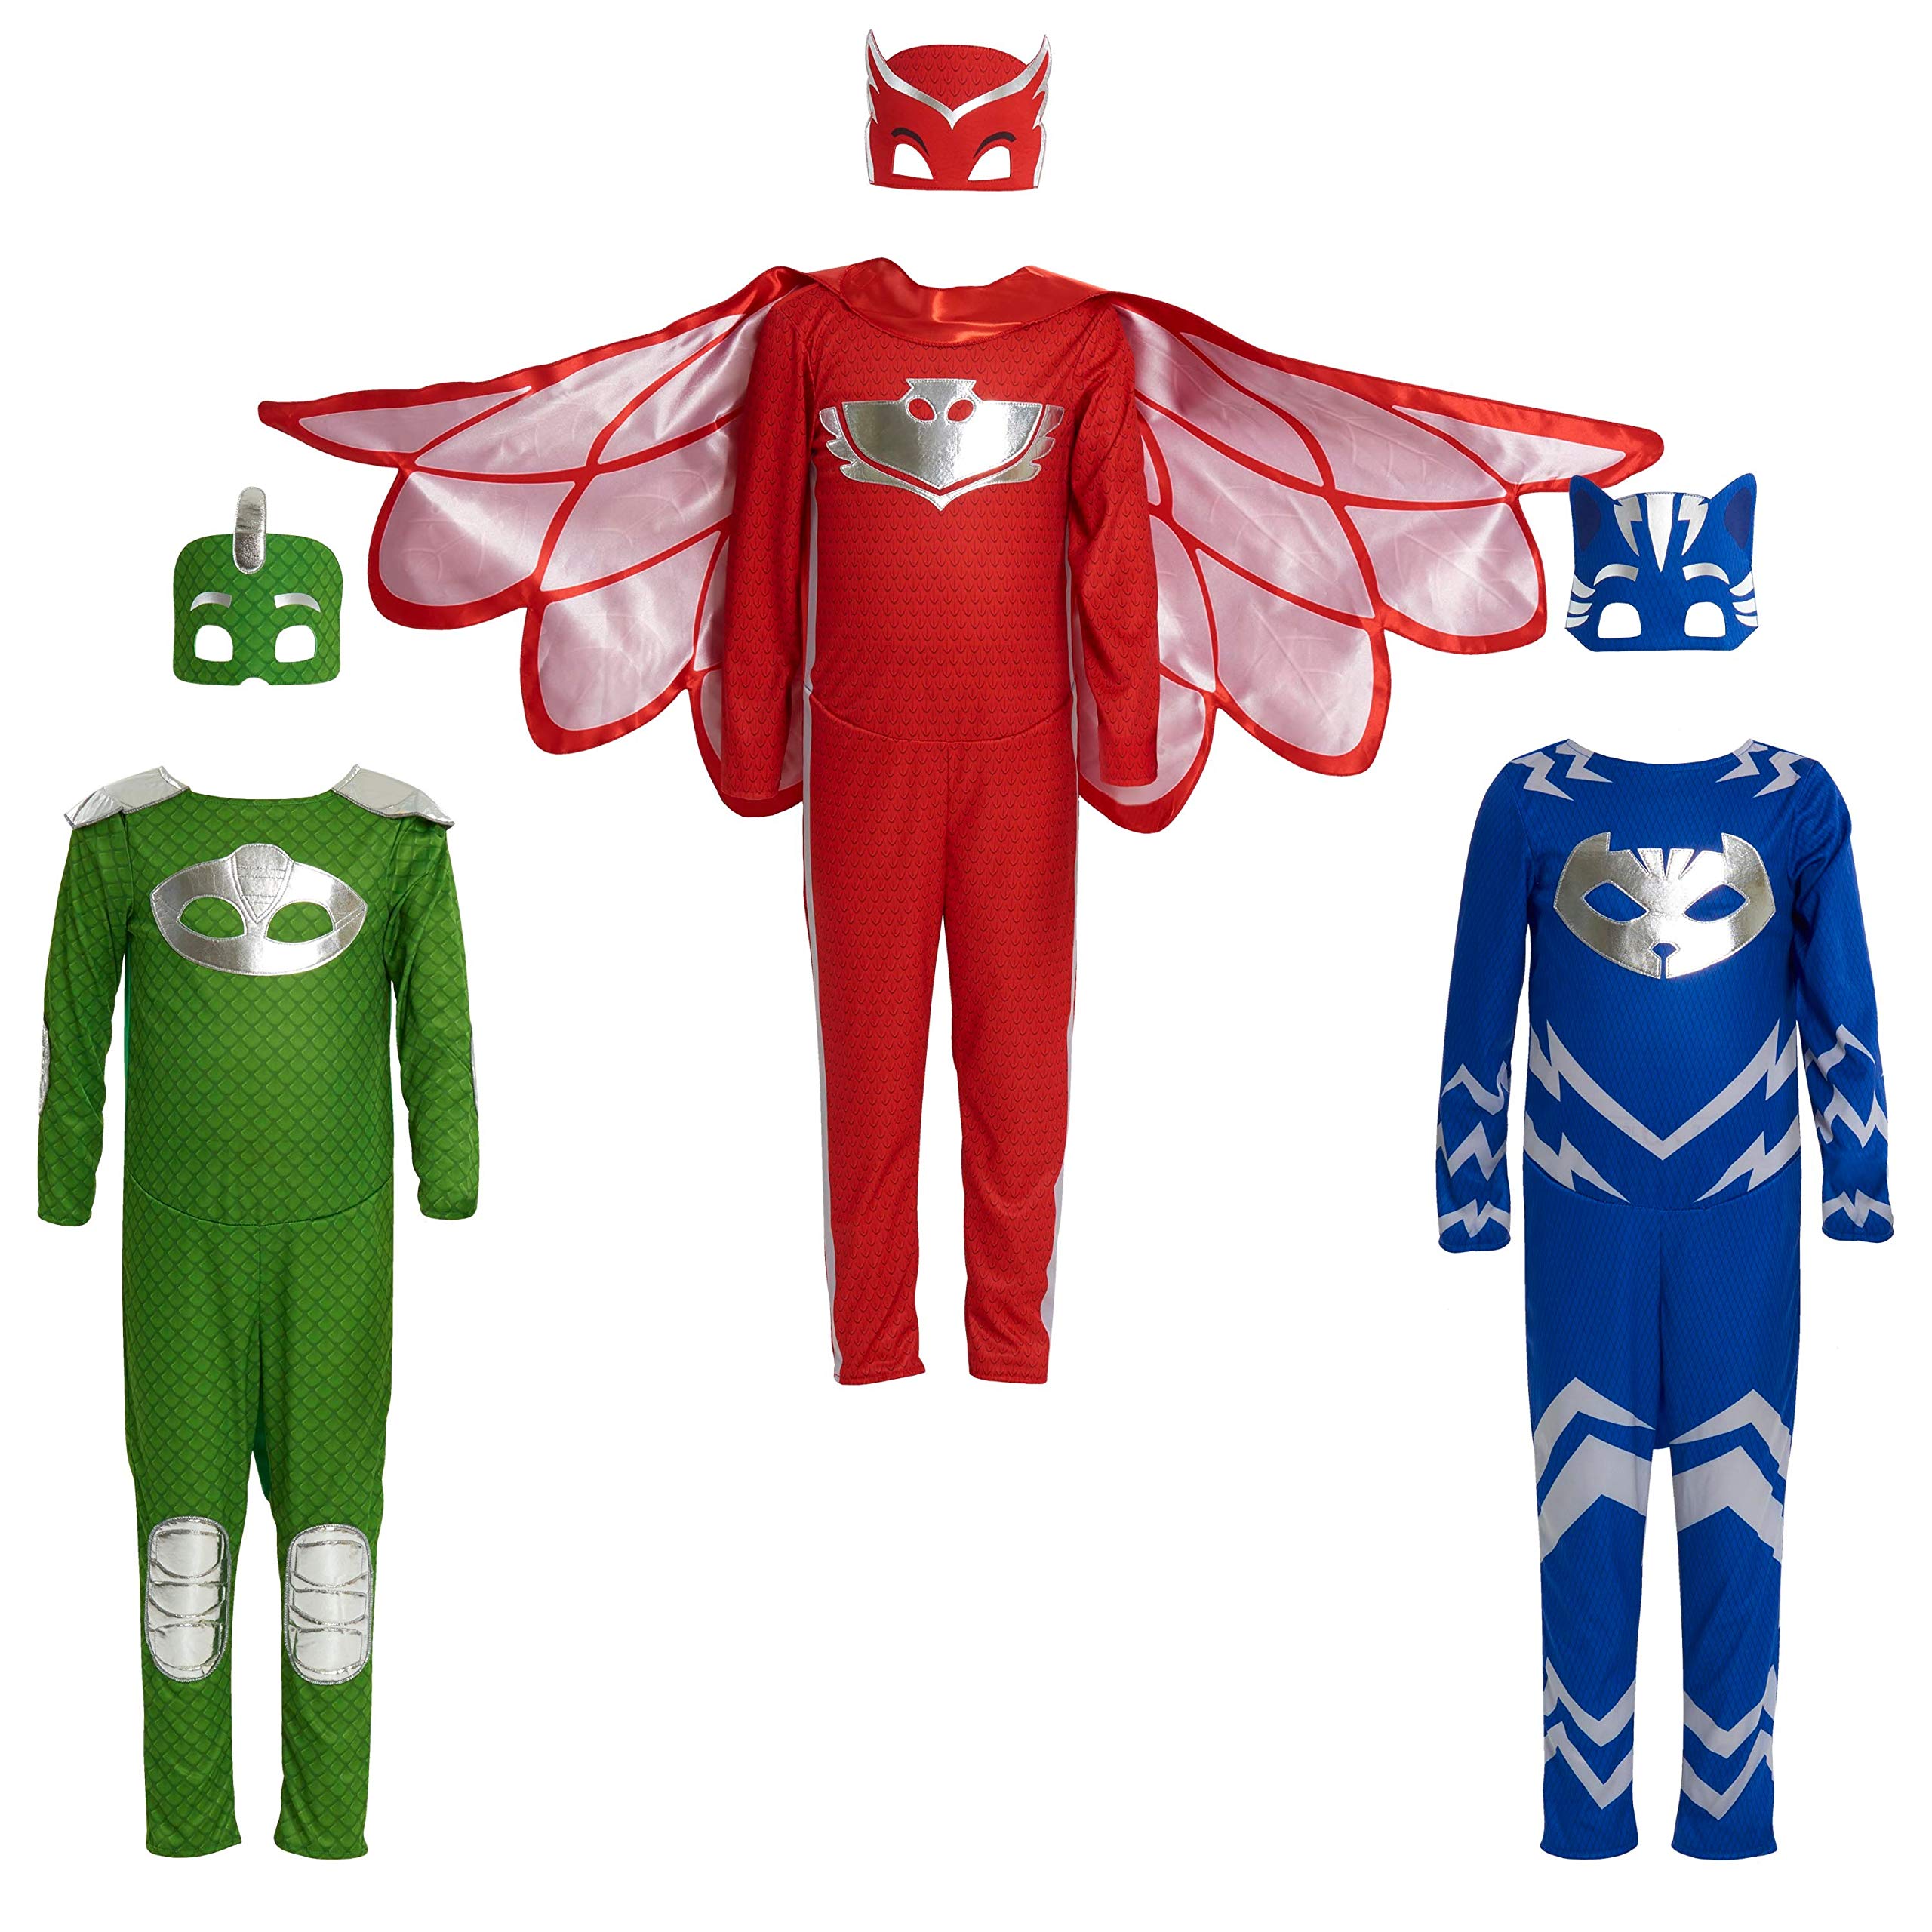 PJ Masks Turbo Blast Gekko Dress Up Set with Soft Mask, Size 4-6X, Kids Pretend Play Costumes, Green, by Just Play